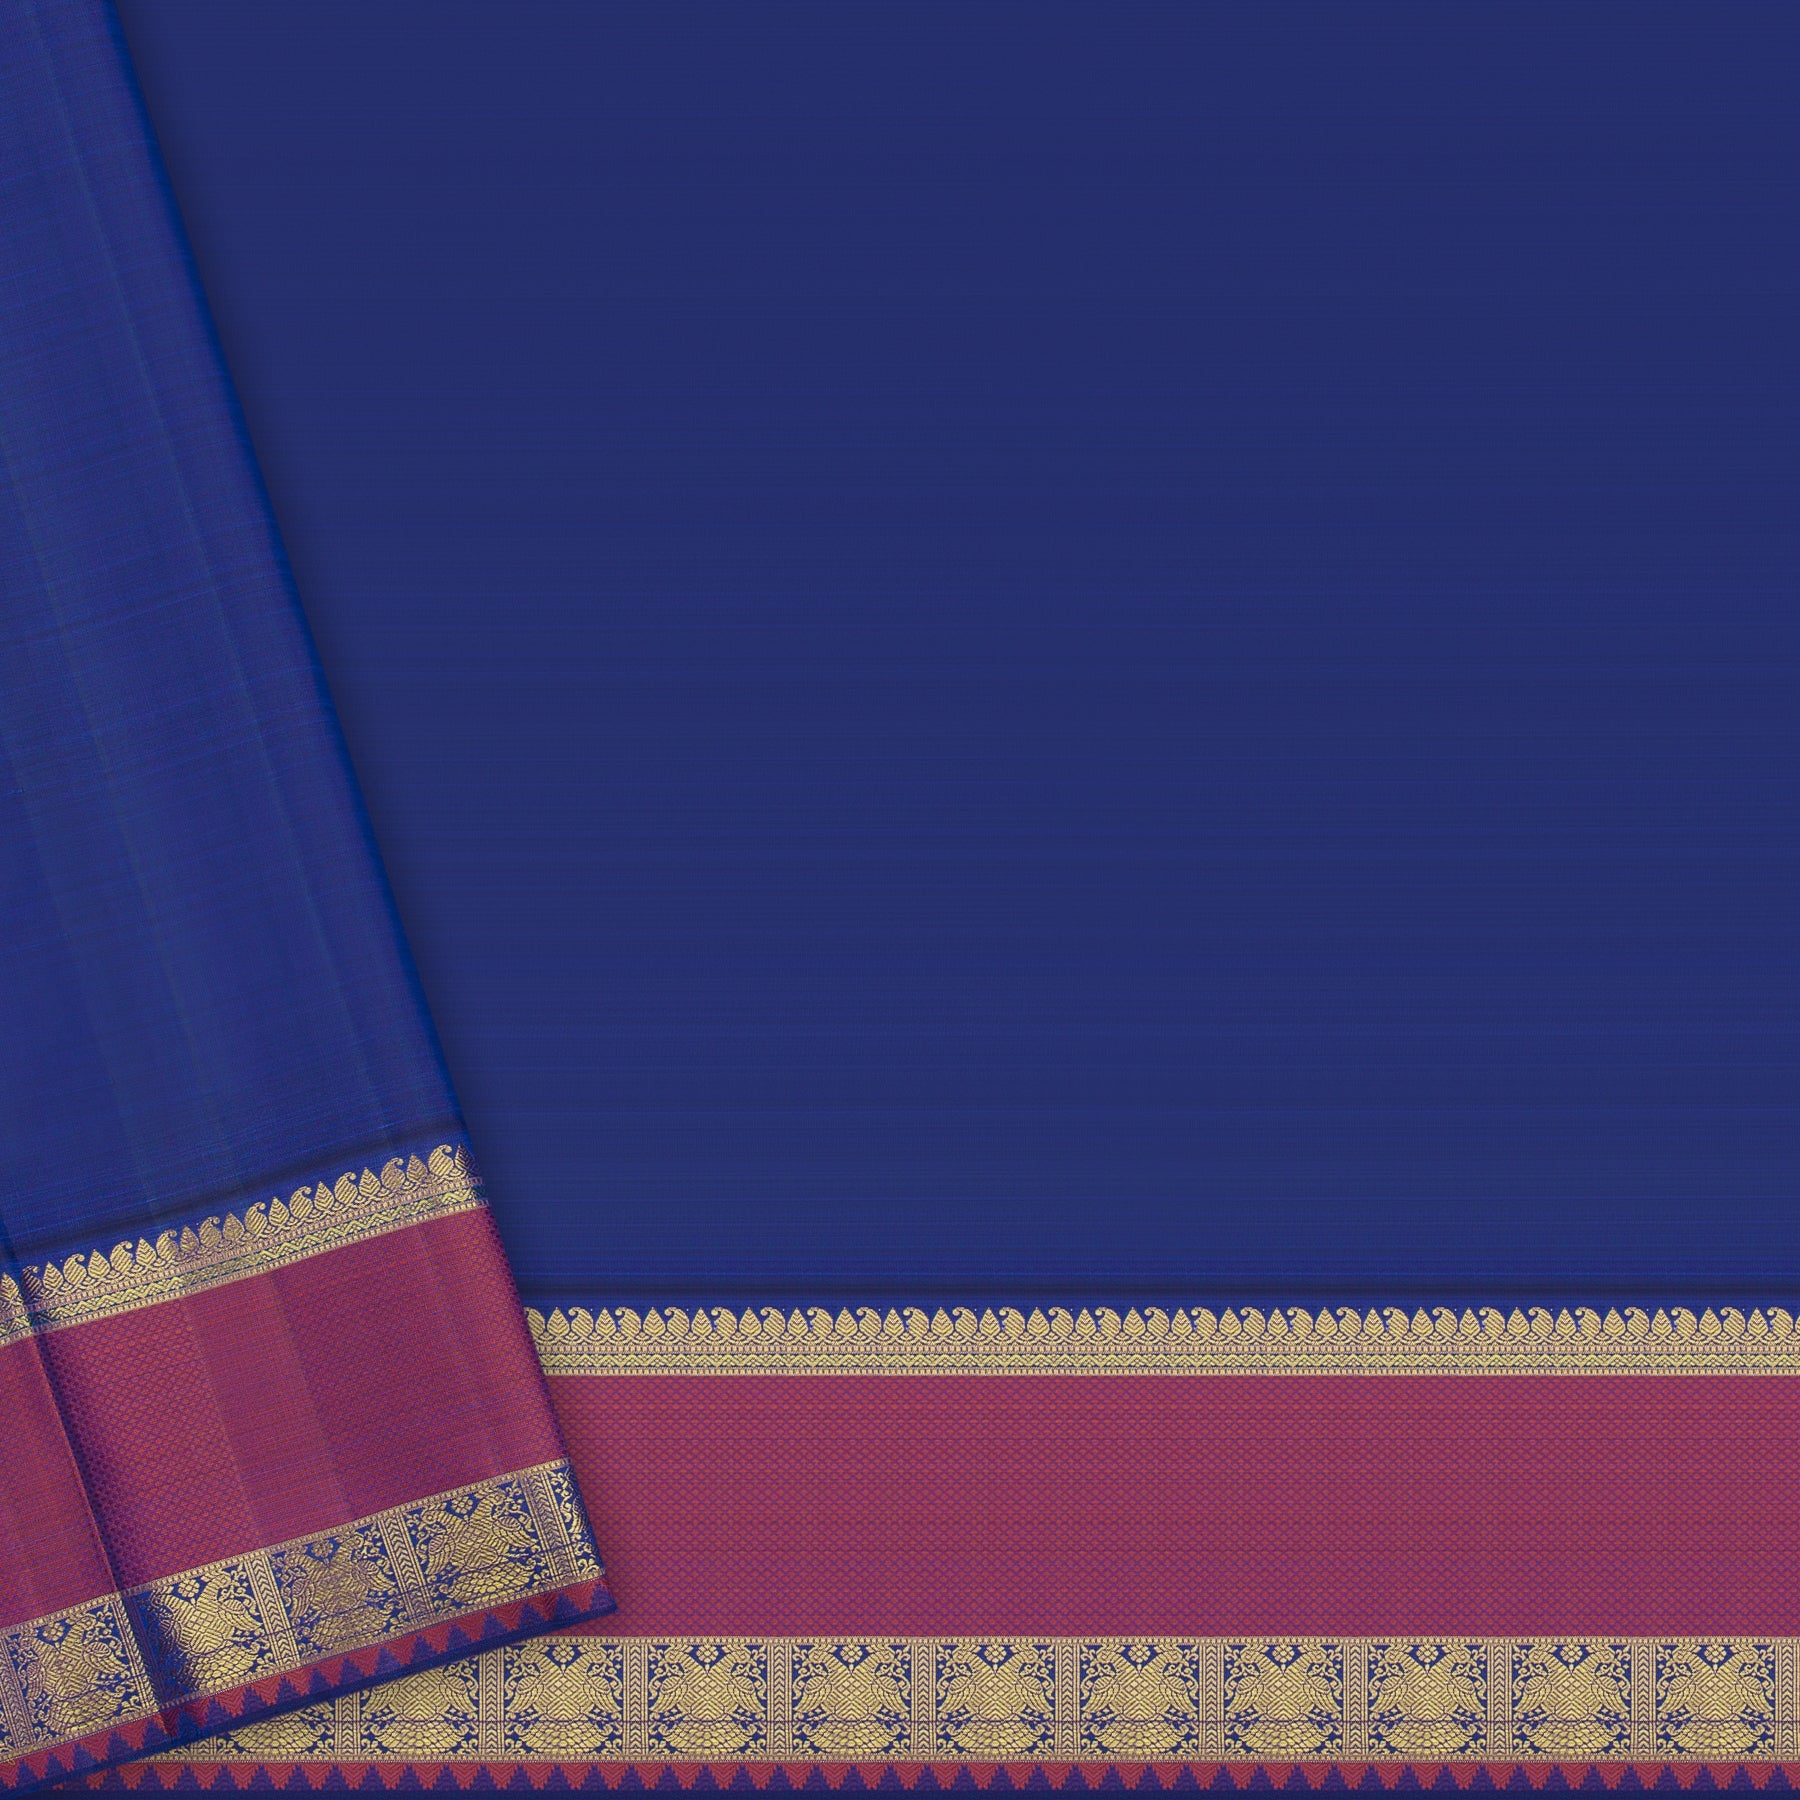 Kanakavalli Kanjivaram Silk Sari 23-110-HS001-08310 - Blouse View